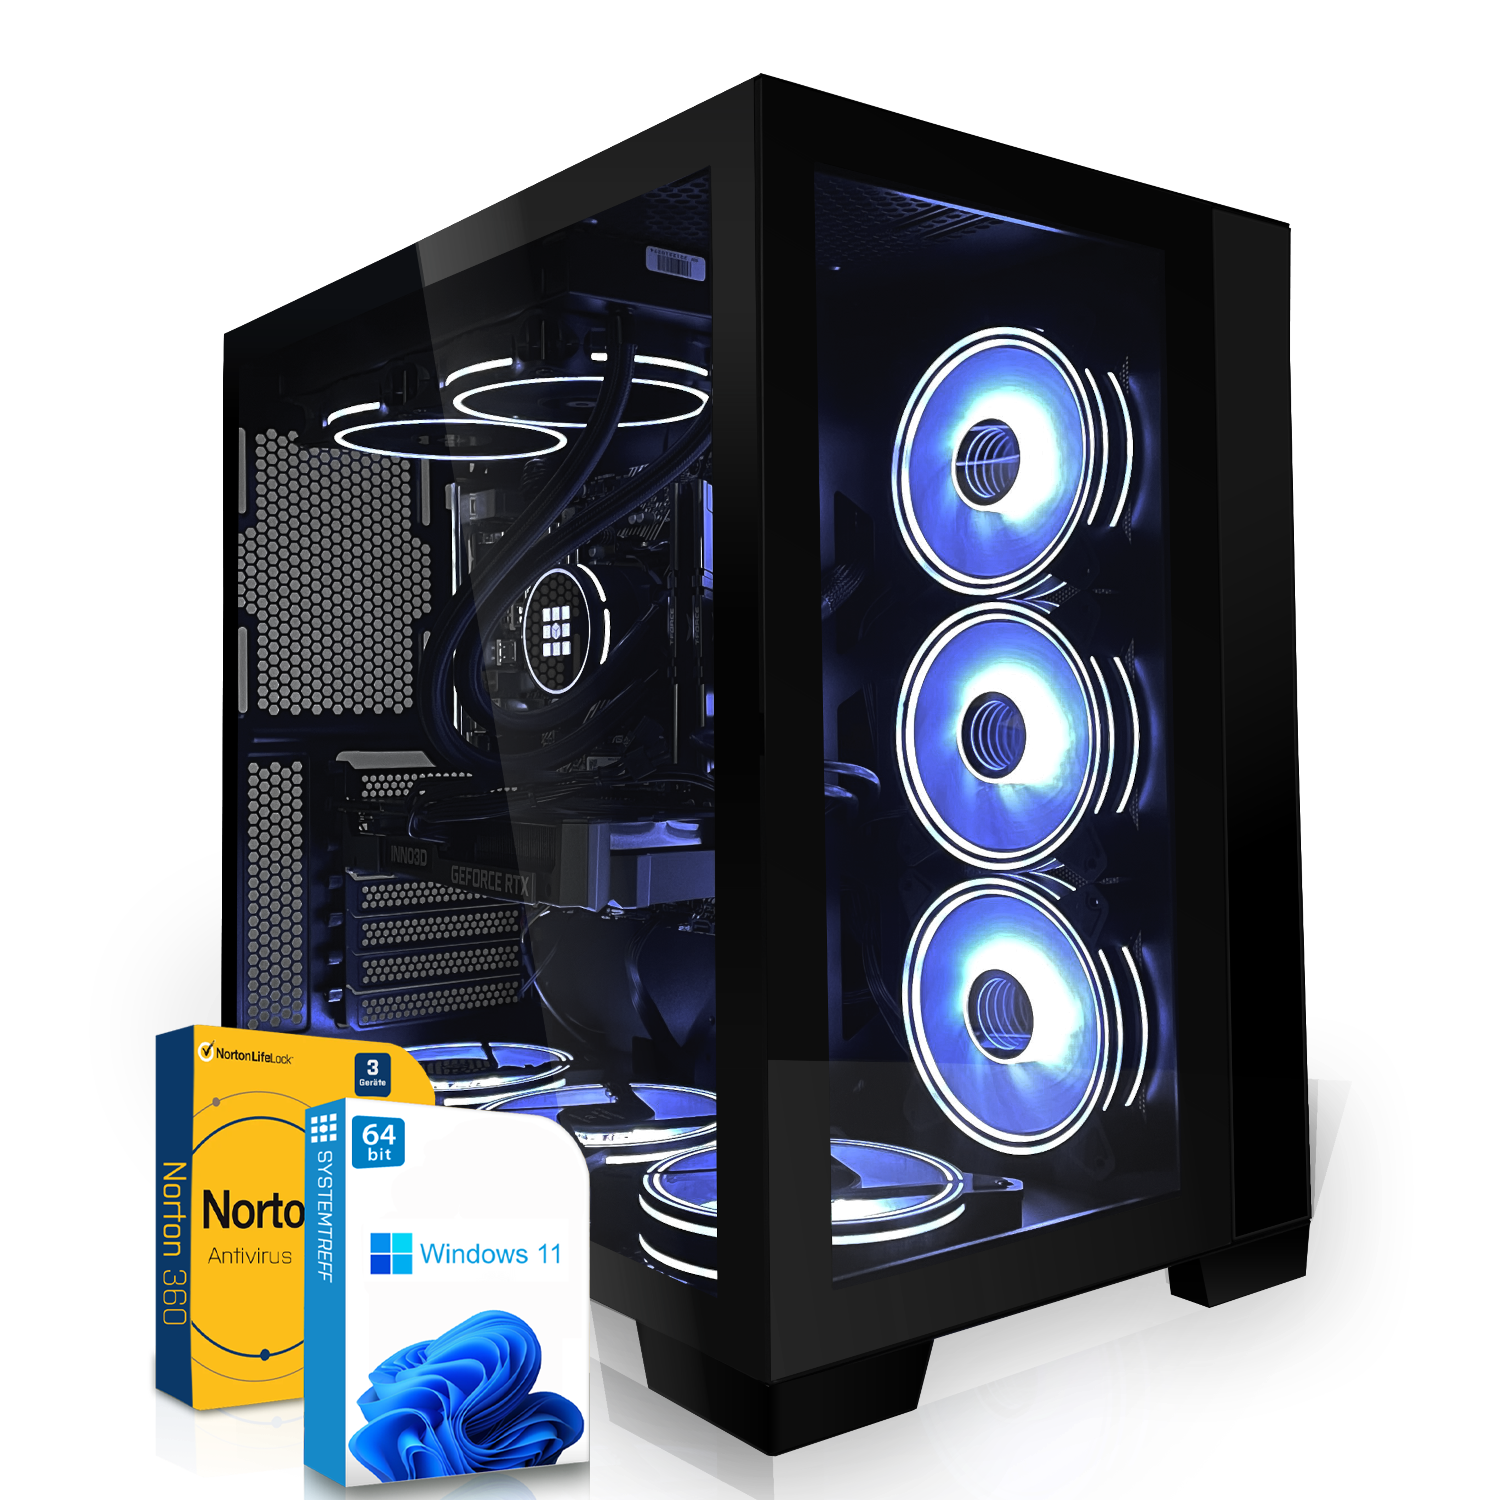 SYSTEMTREFF Pro GB Core™ Radeon™ mit XT mSSD, 7700 GB RX PC Intel® 1000 Windows Intel AMD Prozessor, i7 Pro, RAM, Gaming 32 i7-13700KF, 11 Core Gaming